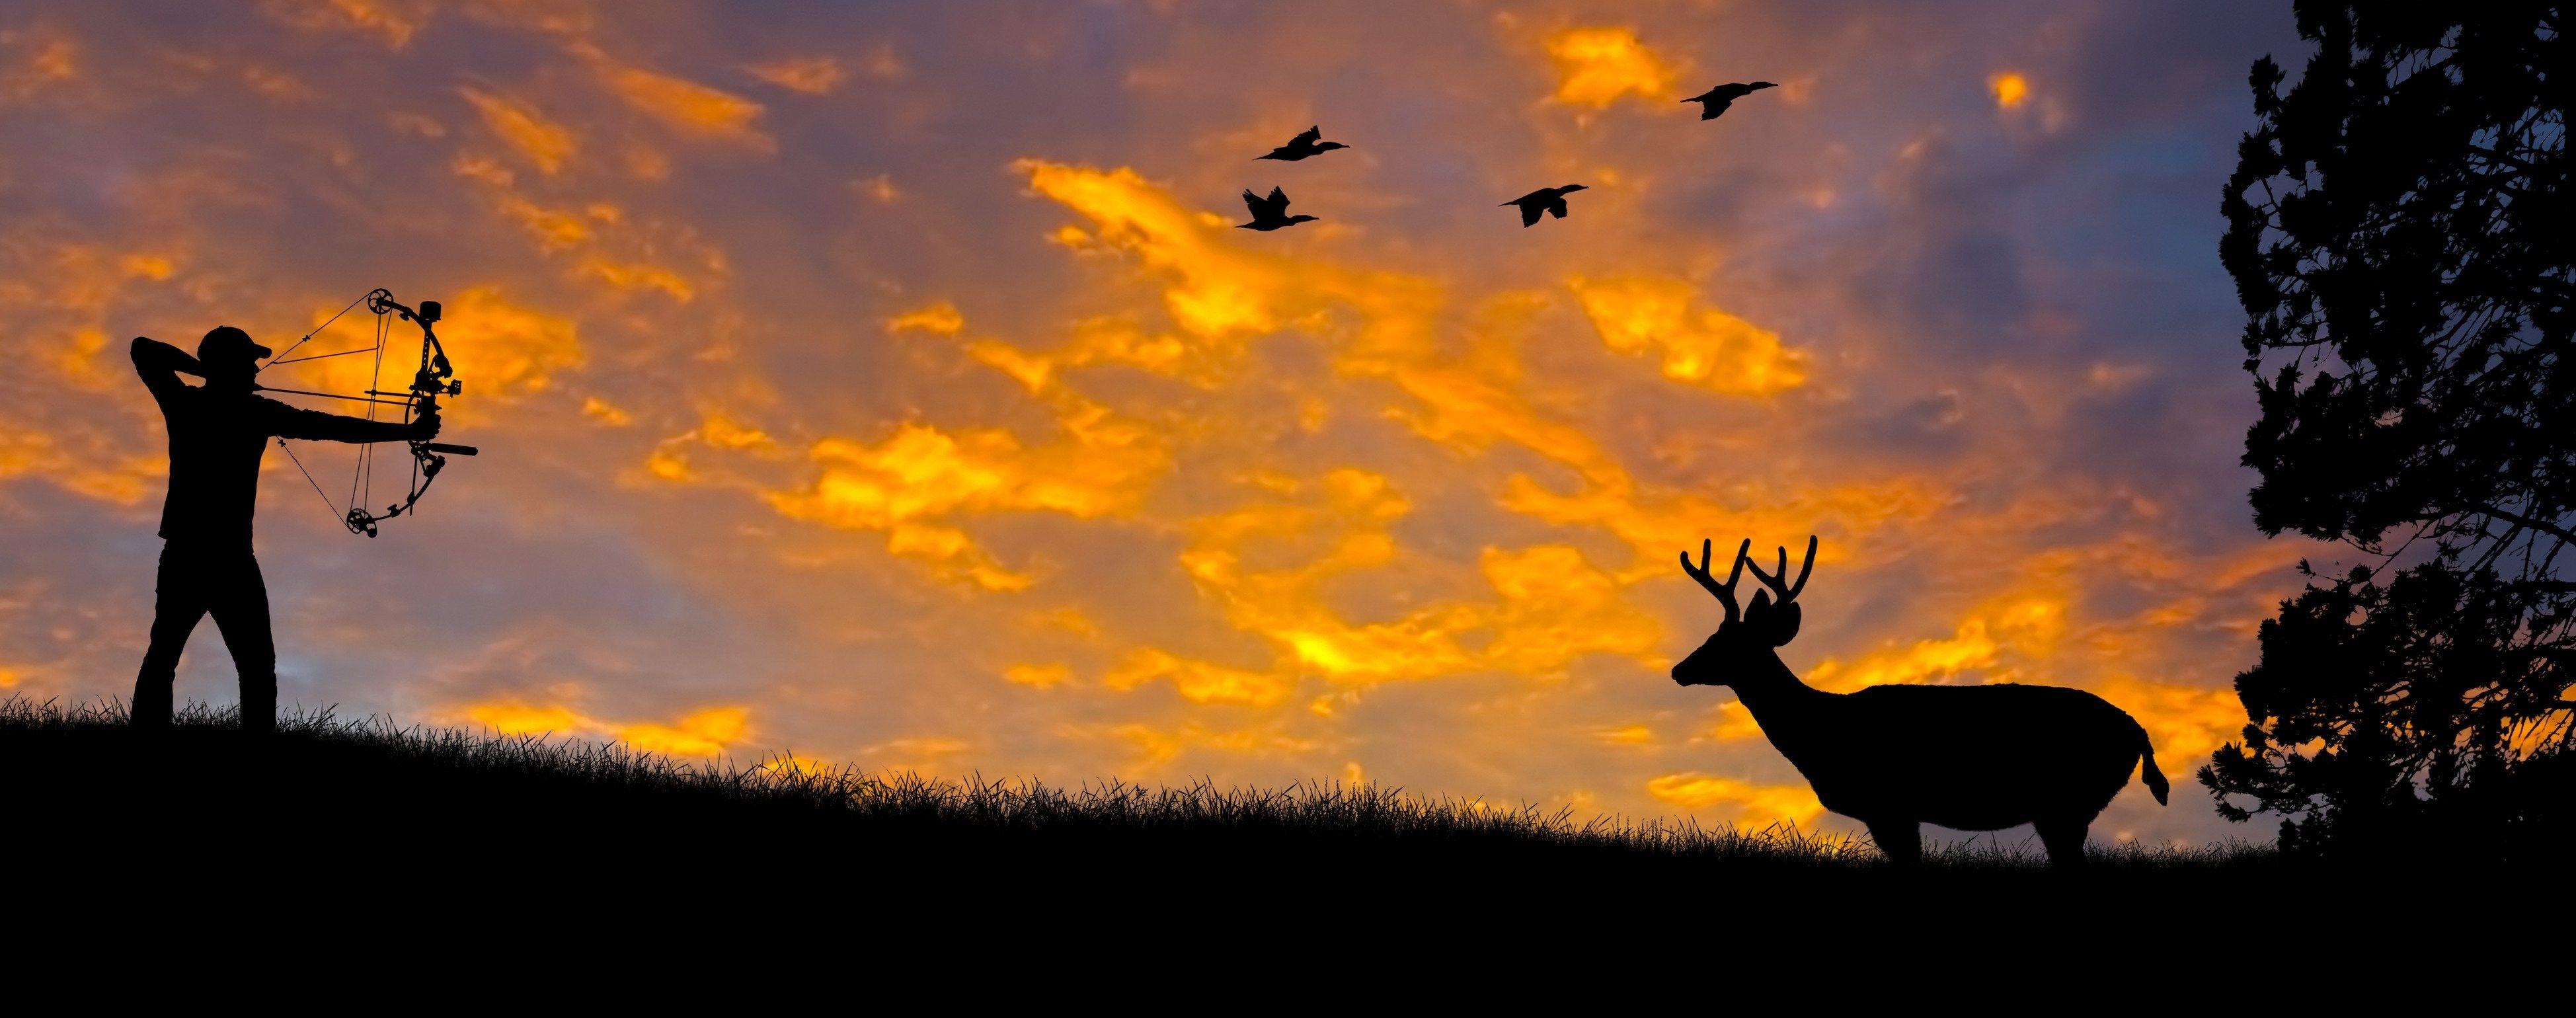 Download Deer Hunting Background with Deer Hunting